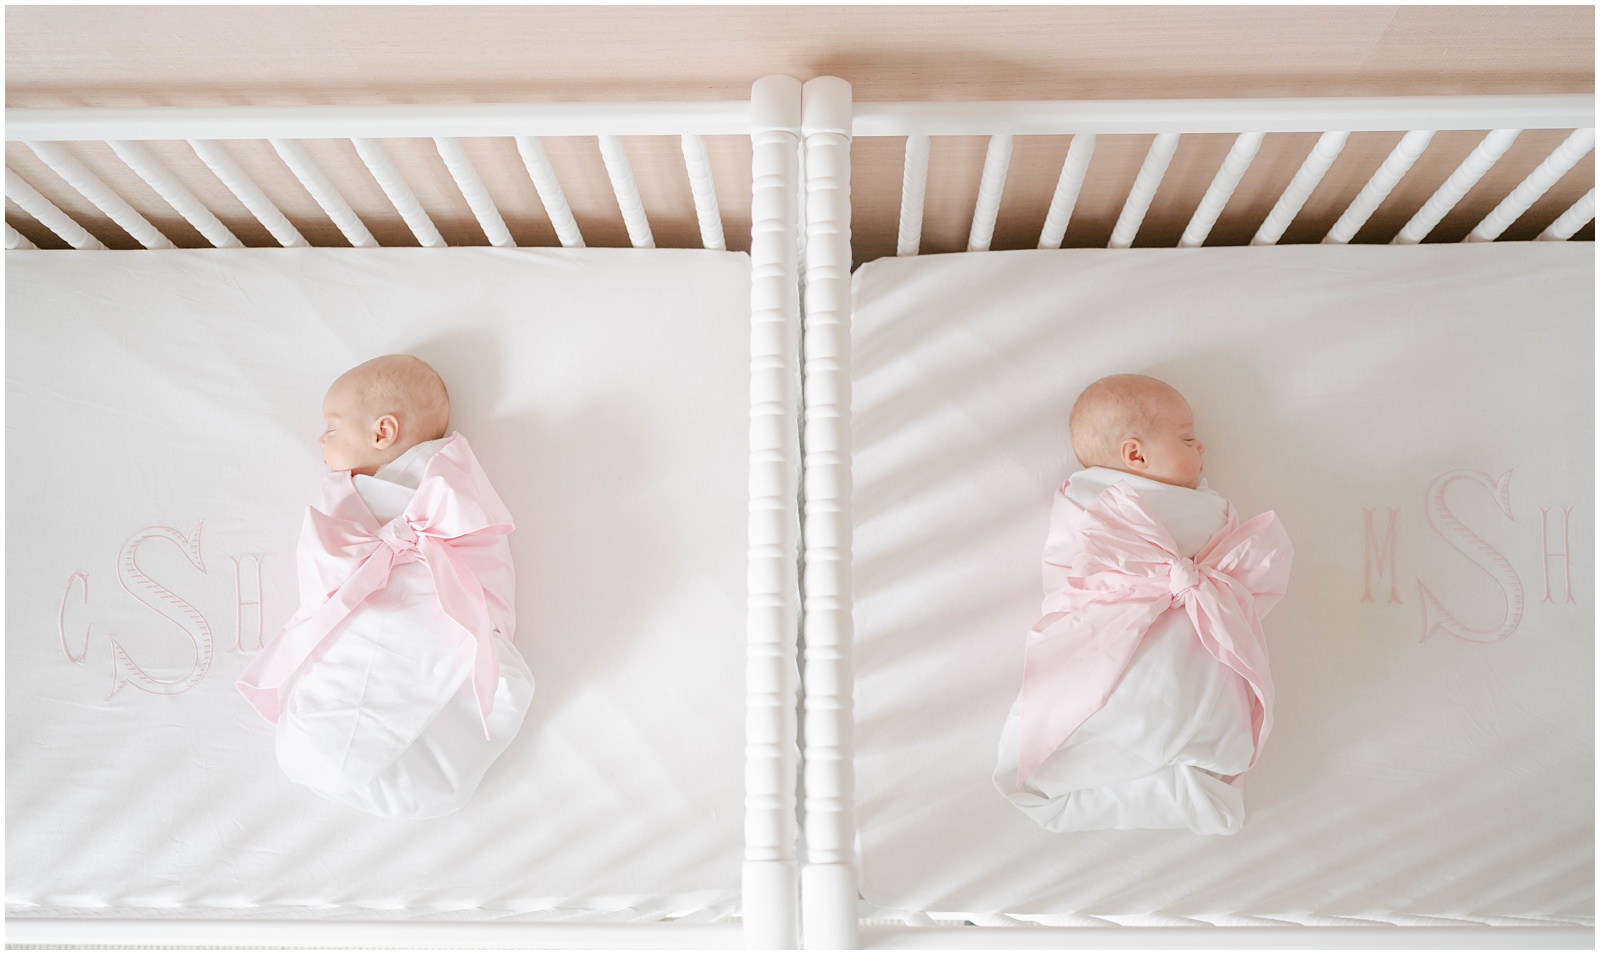 Twins in crib taken by Atlanta, GA photographer